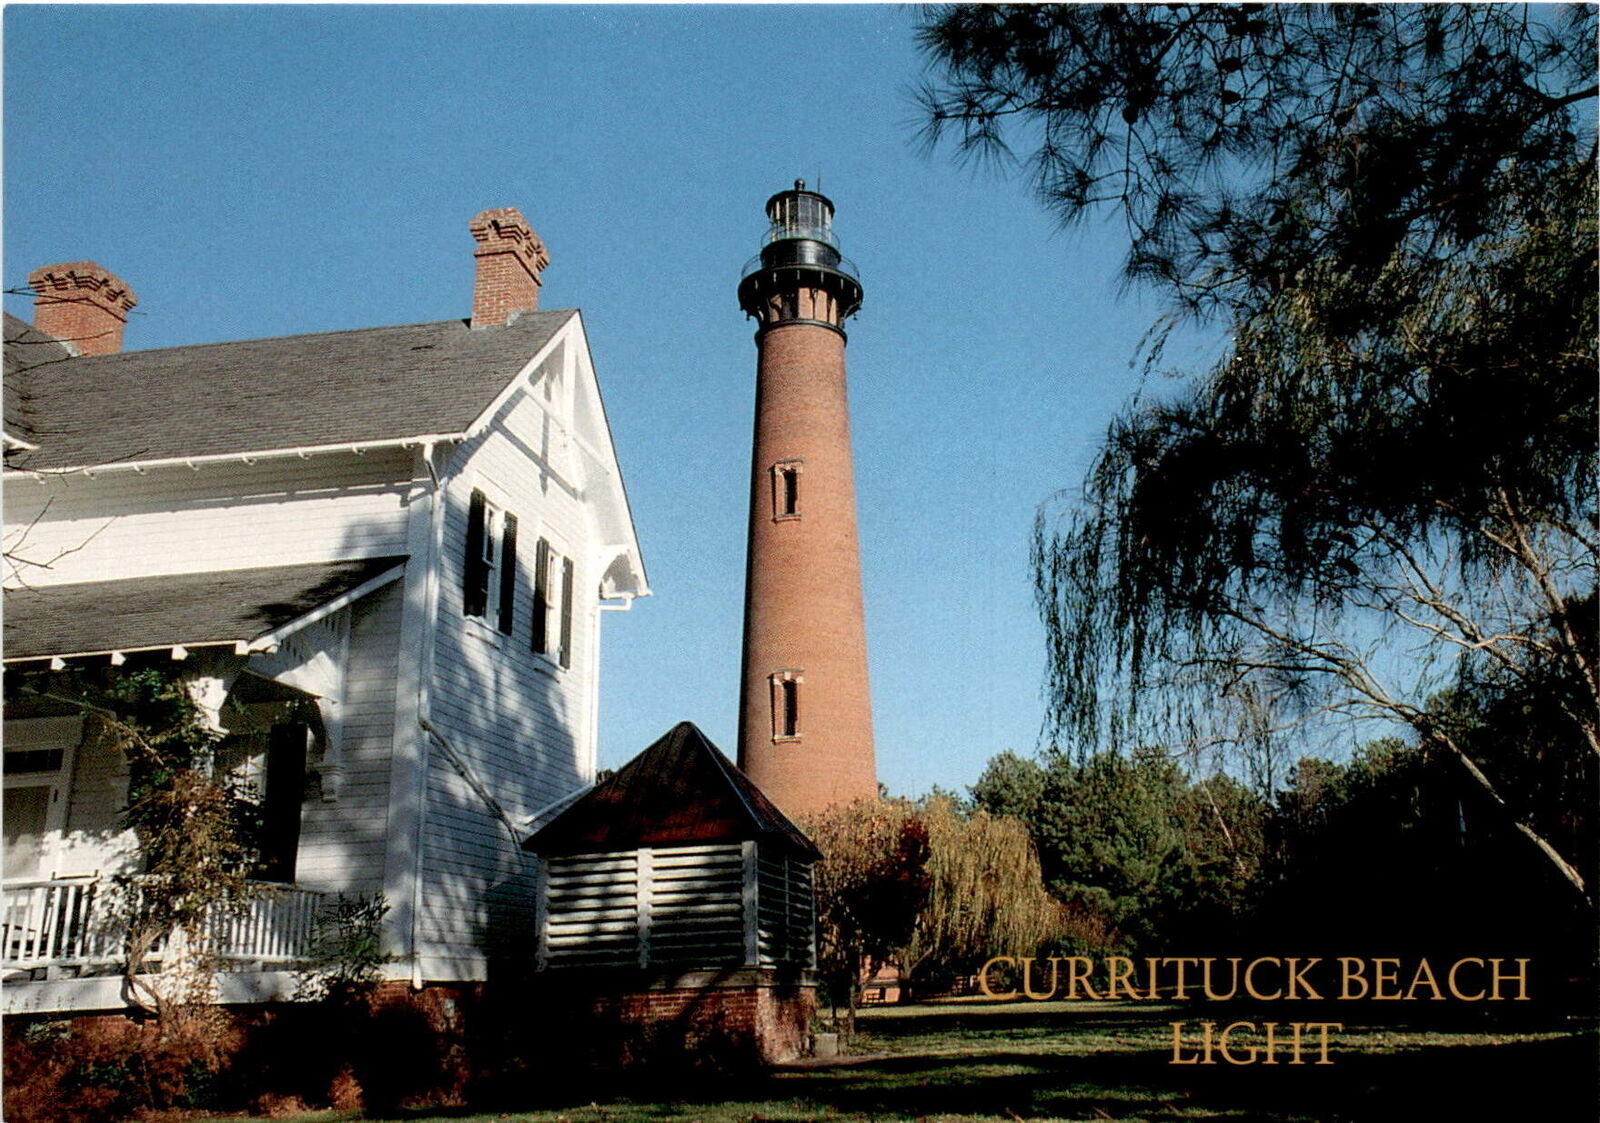 Currituck Beach Light: Iconic Lighthouse Postcard by P.R. Hornby